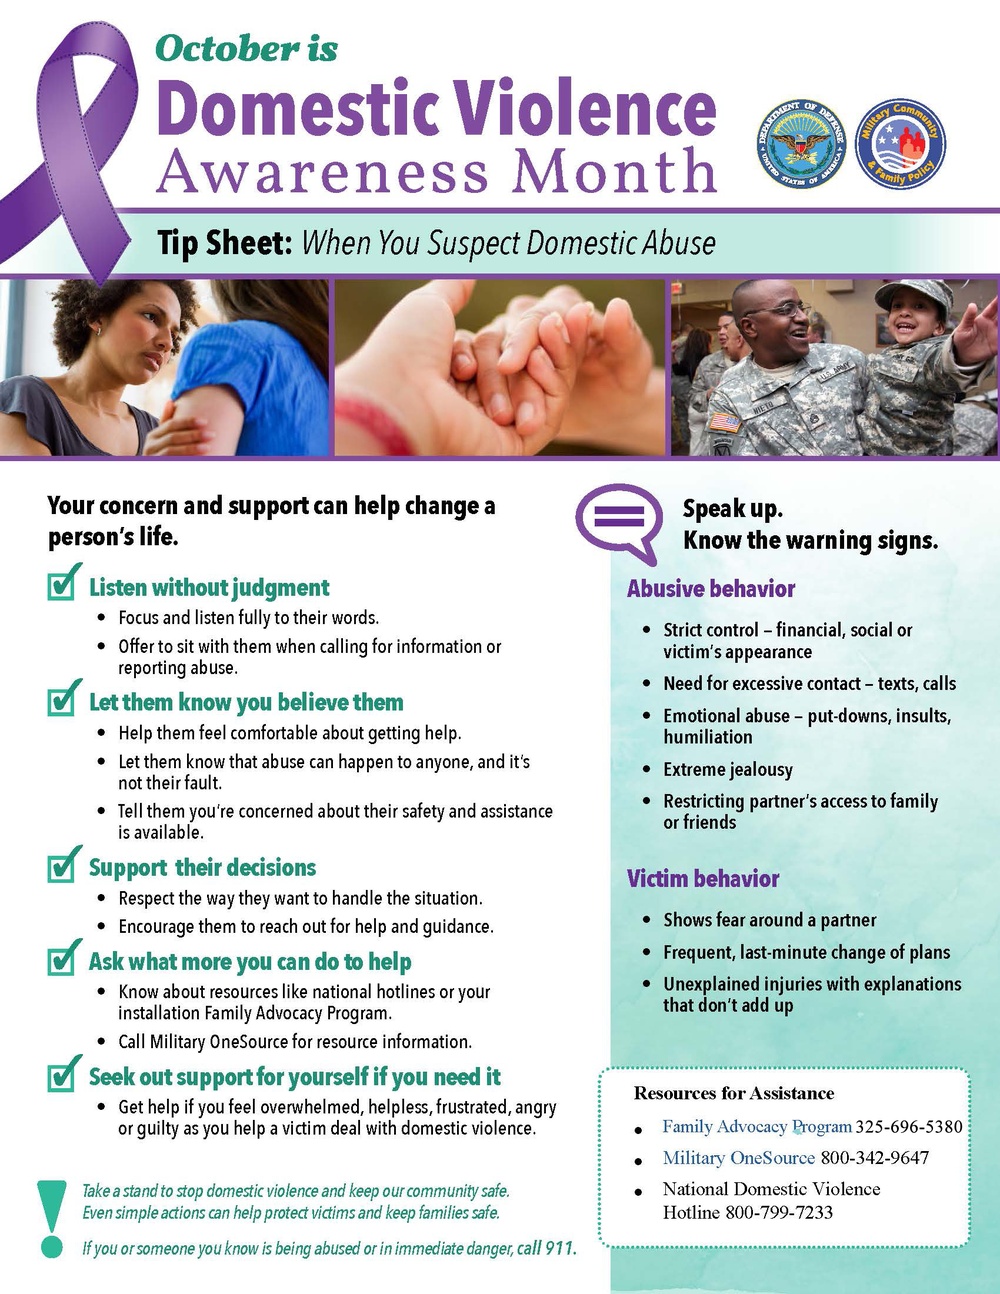 DVIDS Images October domestic violence awareness month [Image 1 of 2]